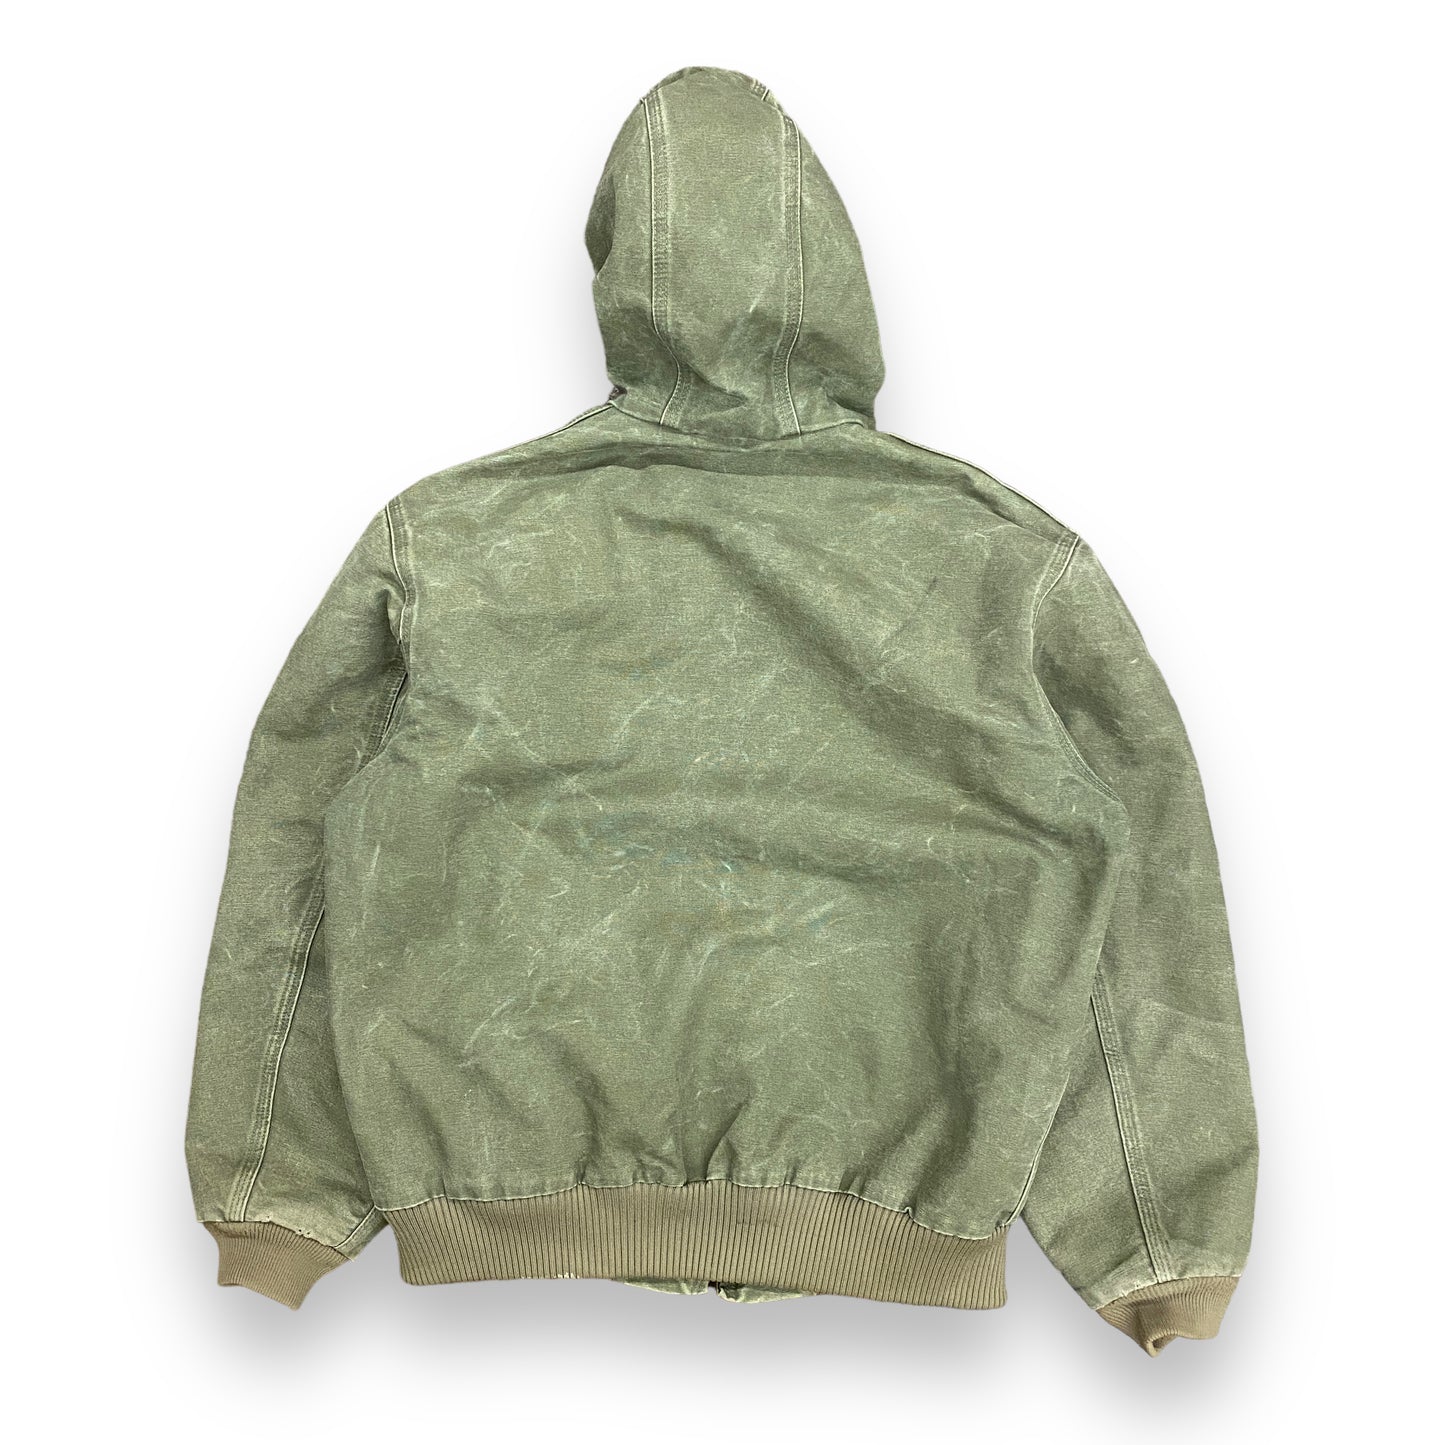 Vintage Carhartt J130 Quilt Lined Green Canvas Jacket - Size Medium